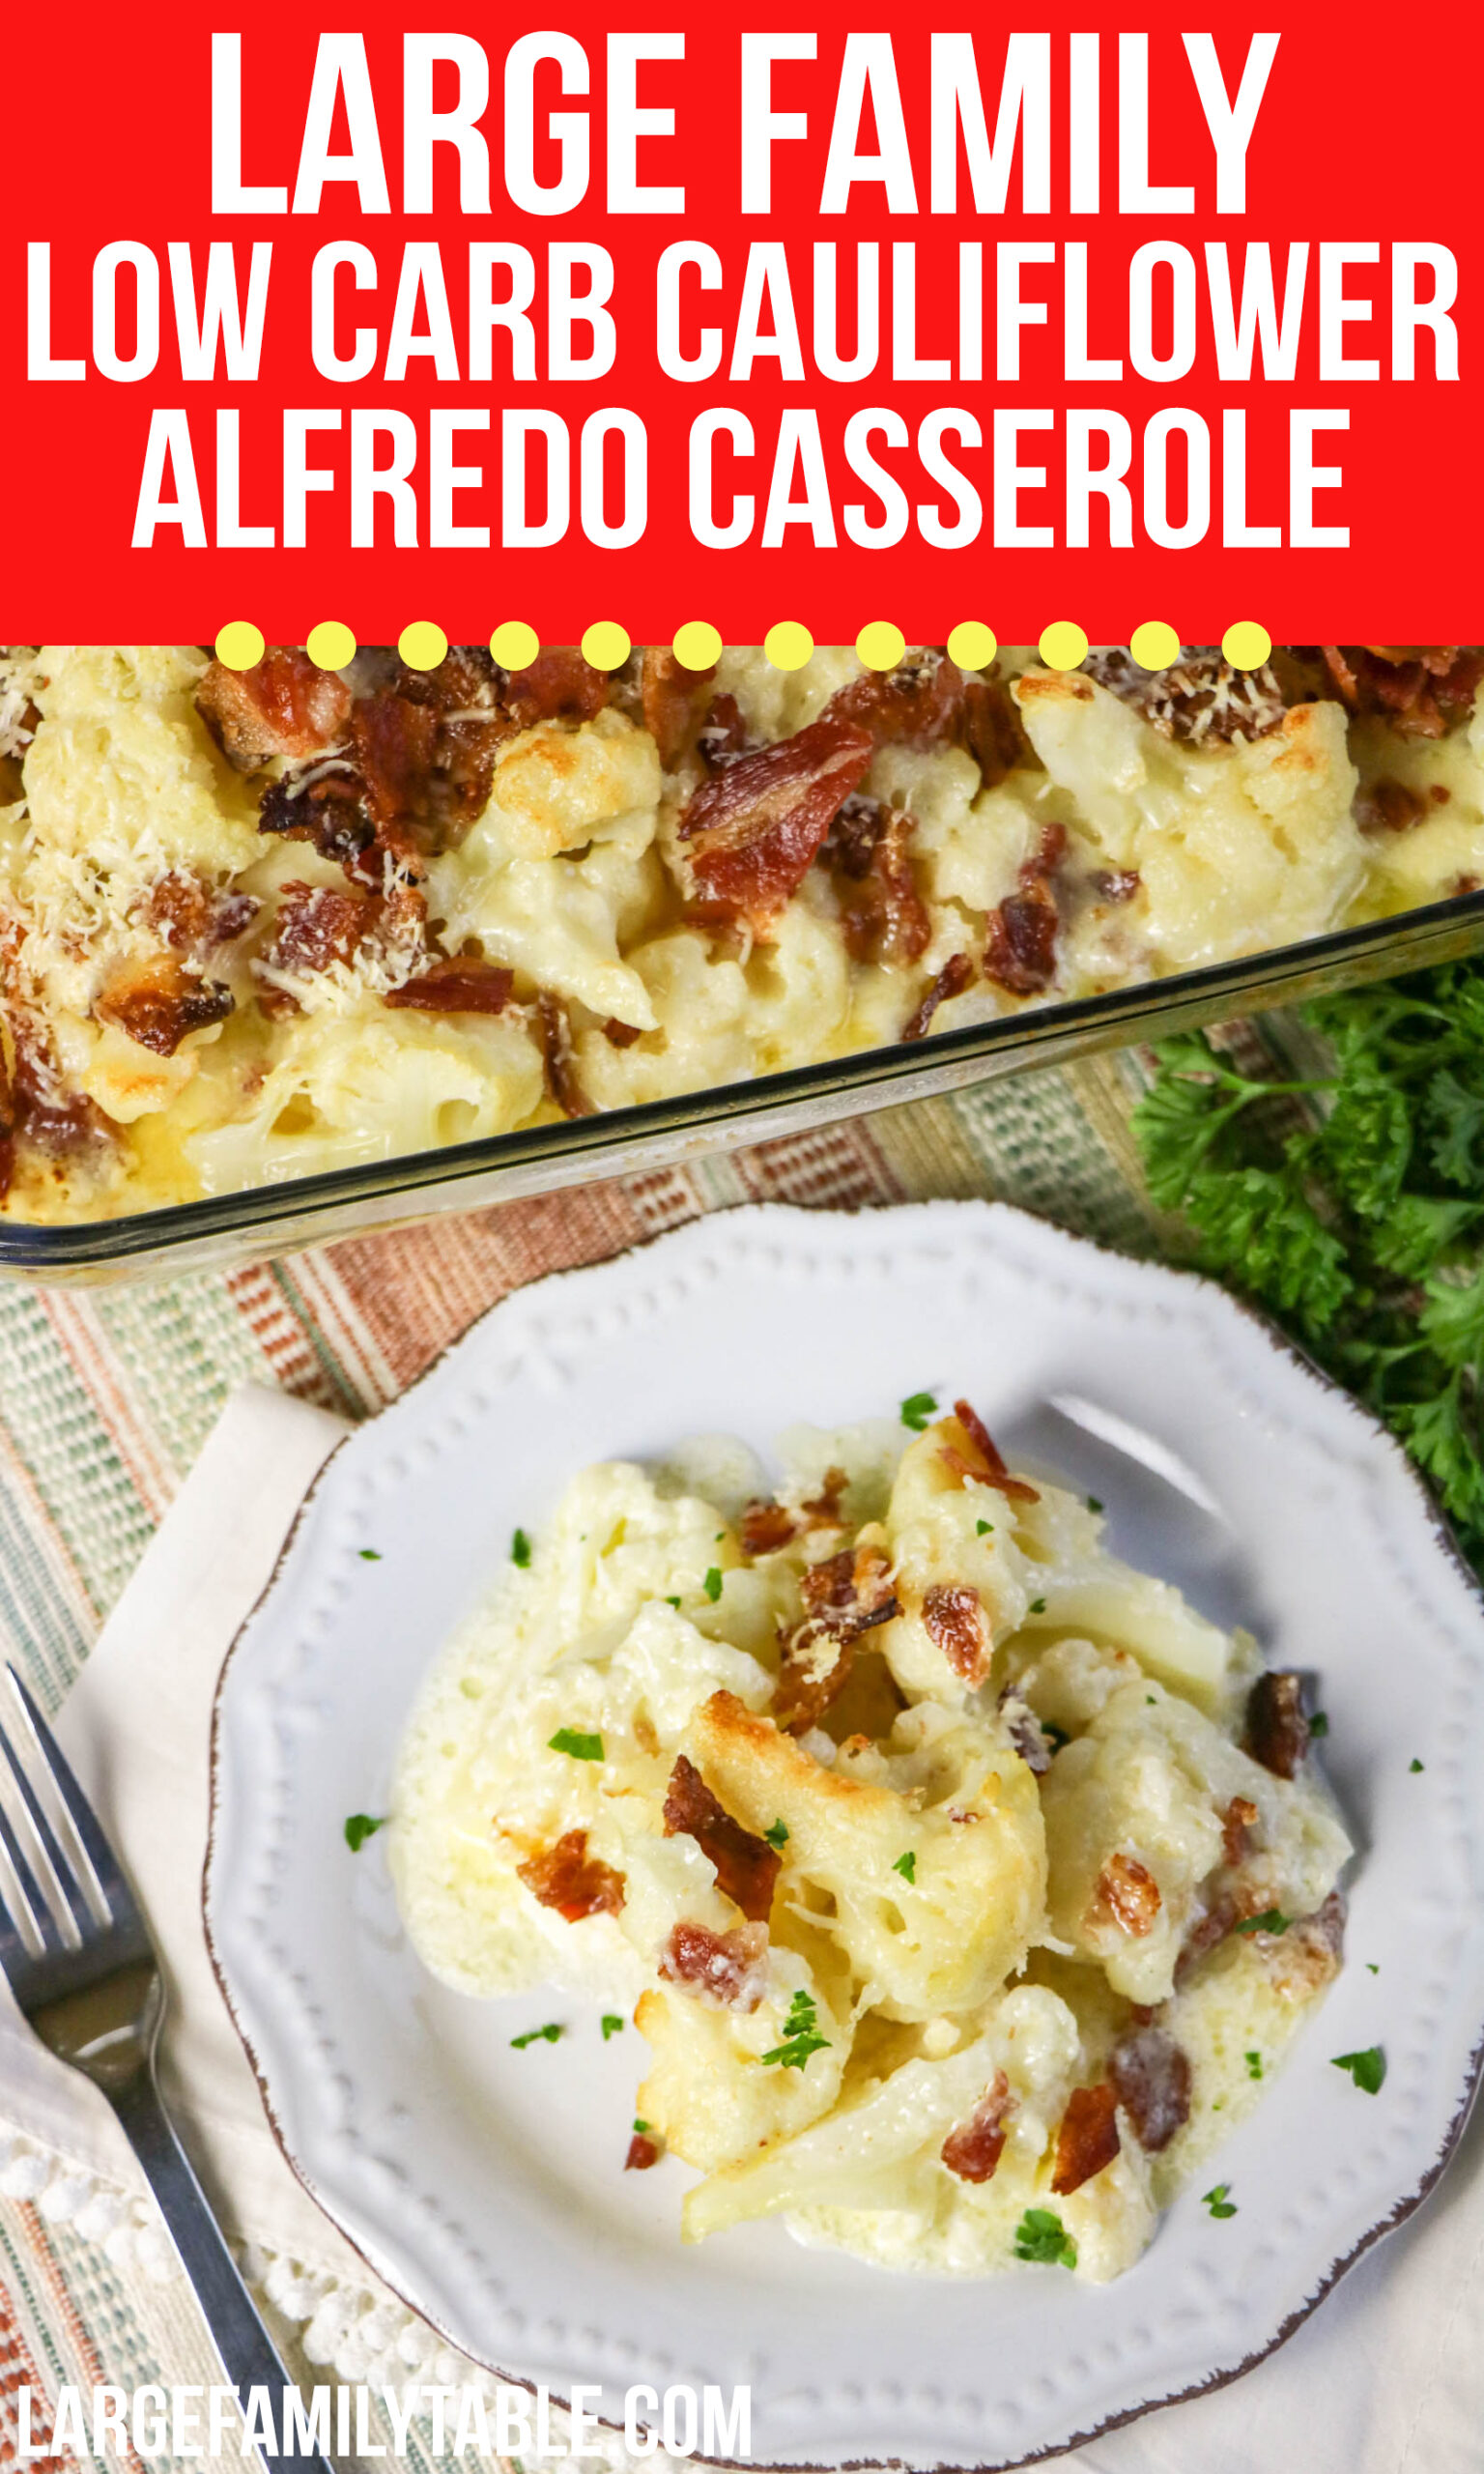 Low Carb Cauliflower Alfredo Casserole